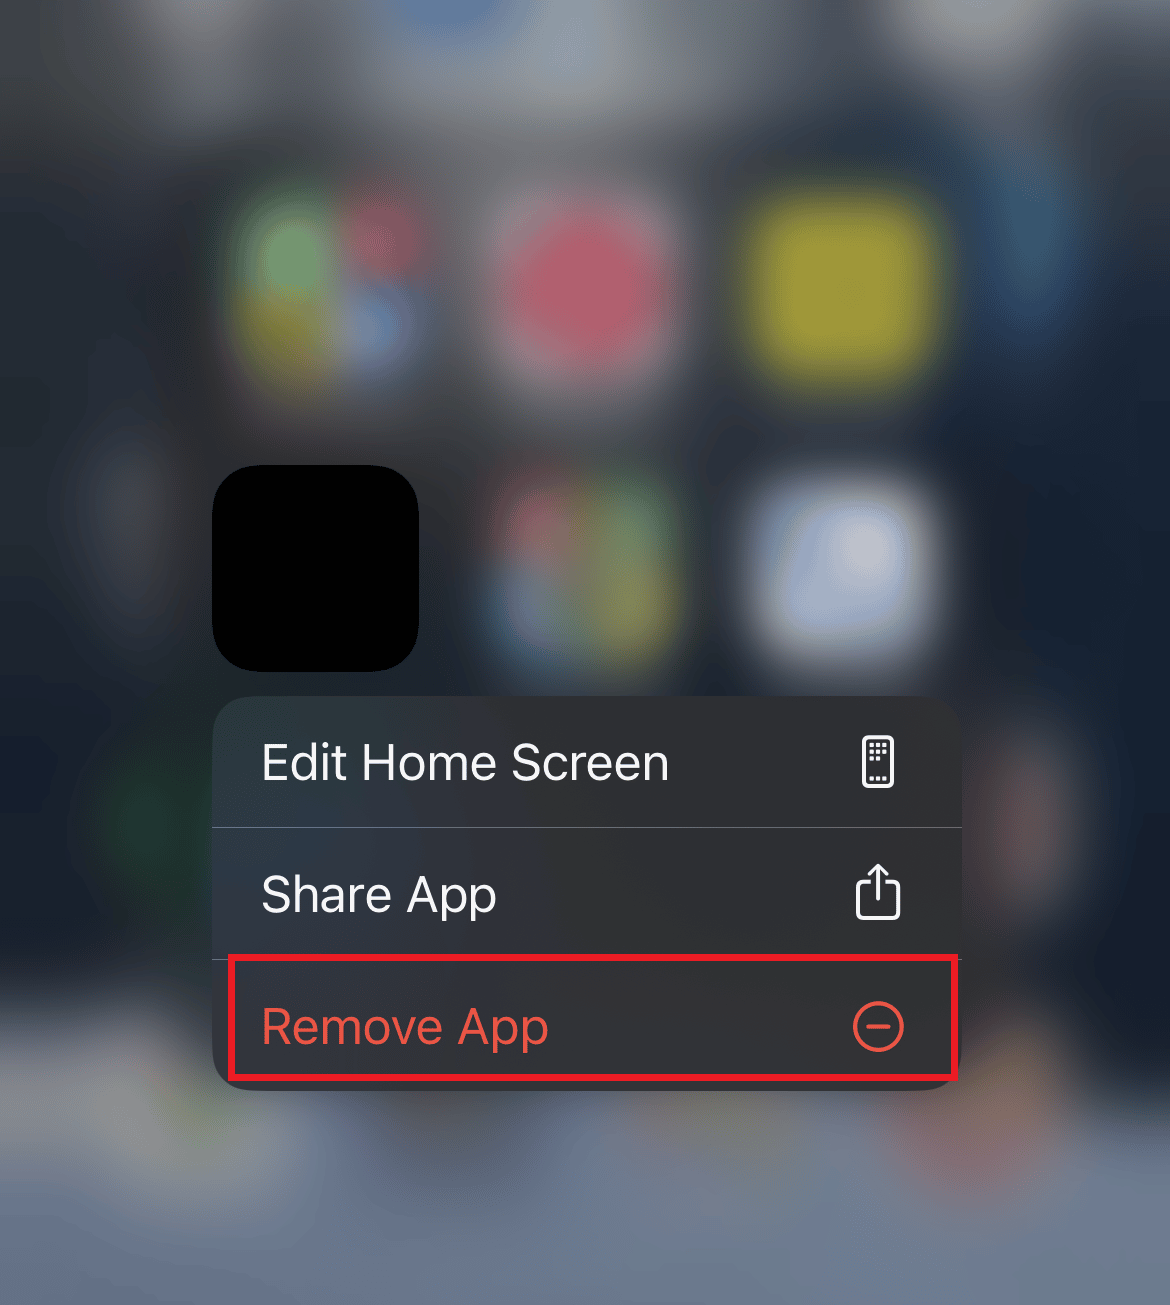 Tap on Remove App